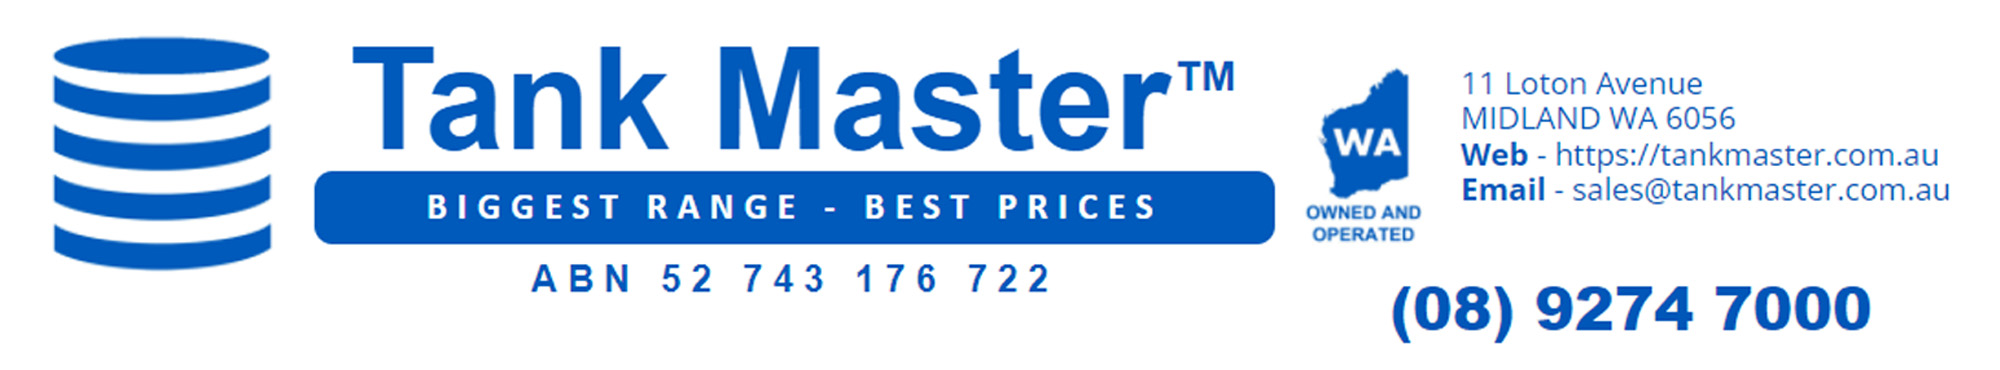 Tank Master Print Pages Header and Logo